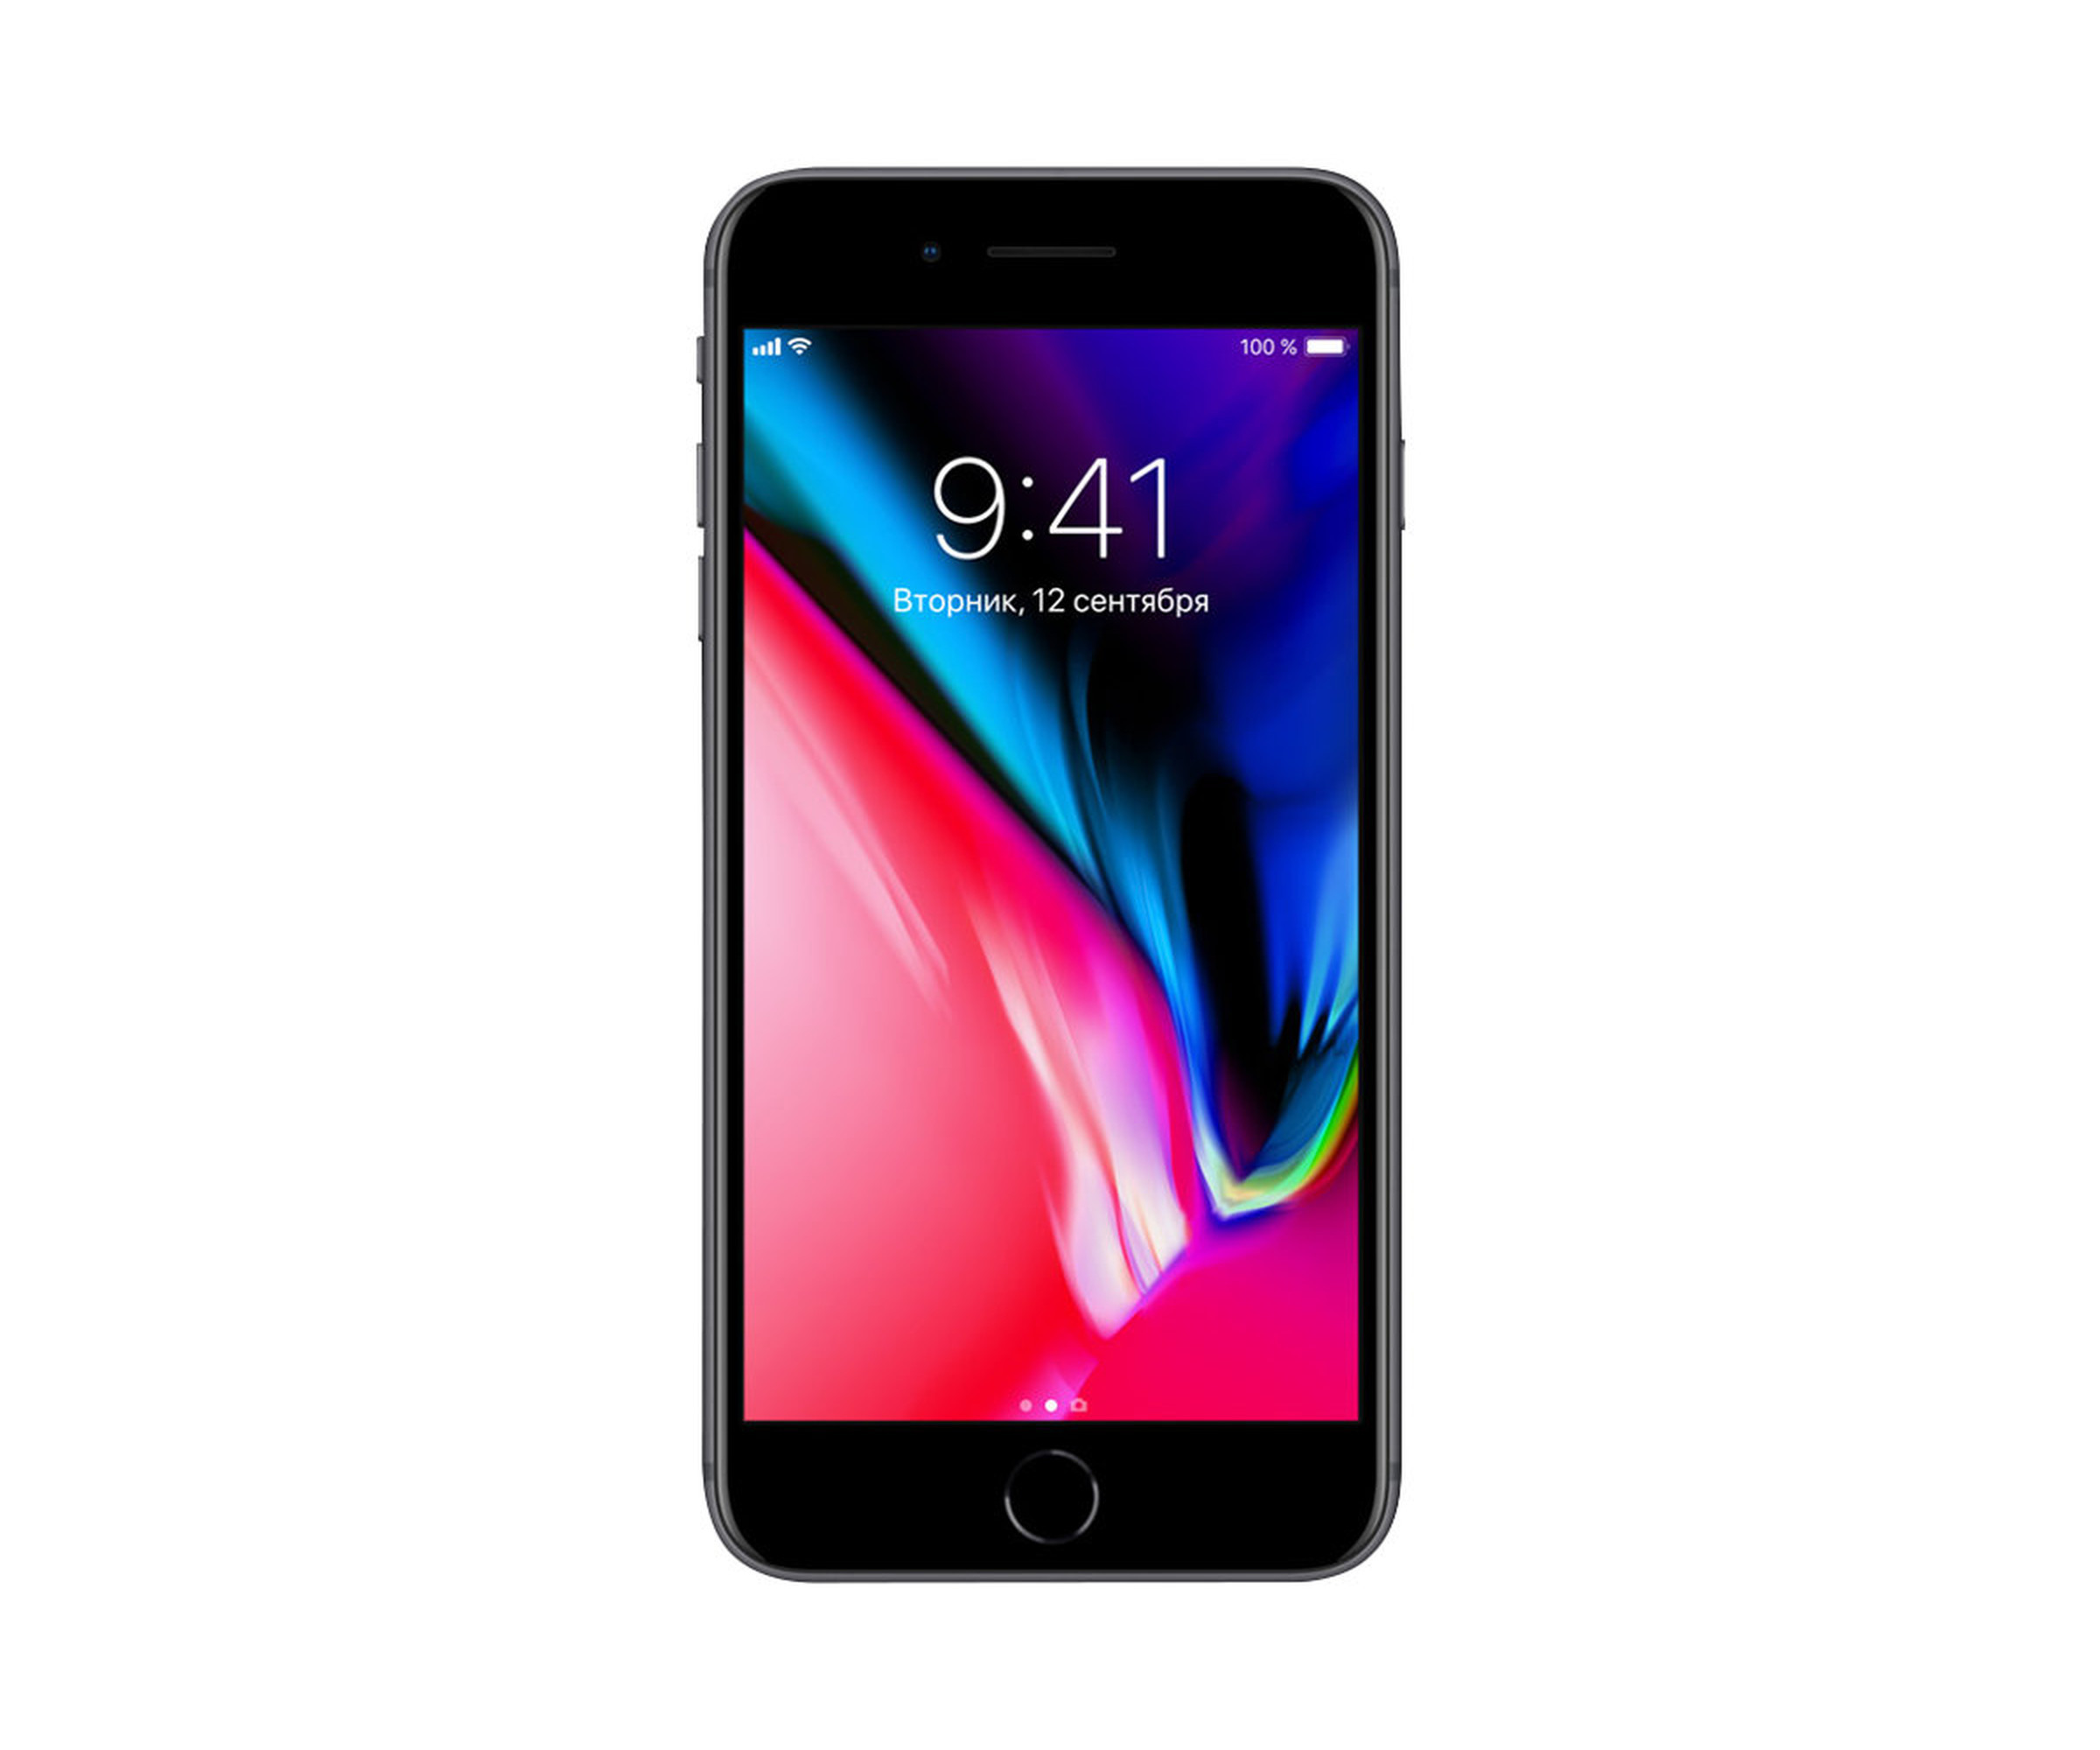 Apple iPhone 8 Plus - Smartphone - 4G LTE Advanced - 64 GB - GSM - 5.5